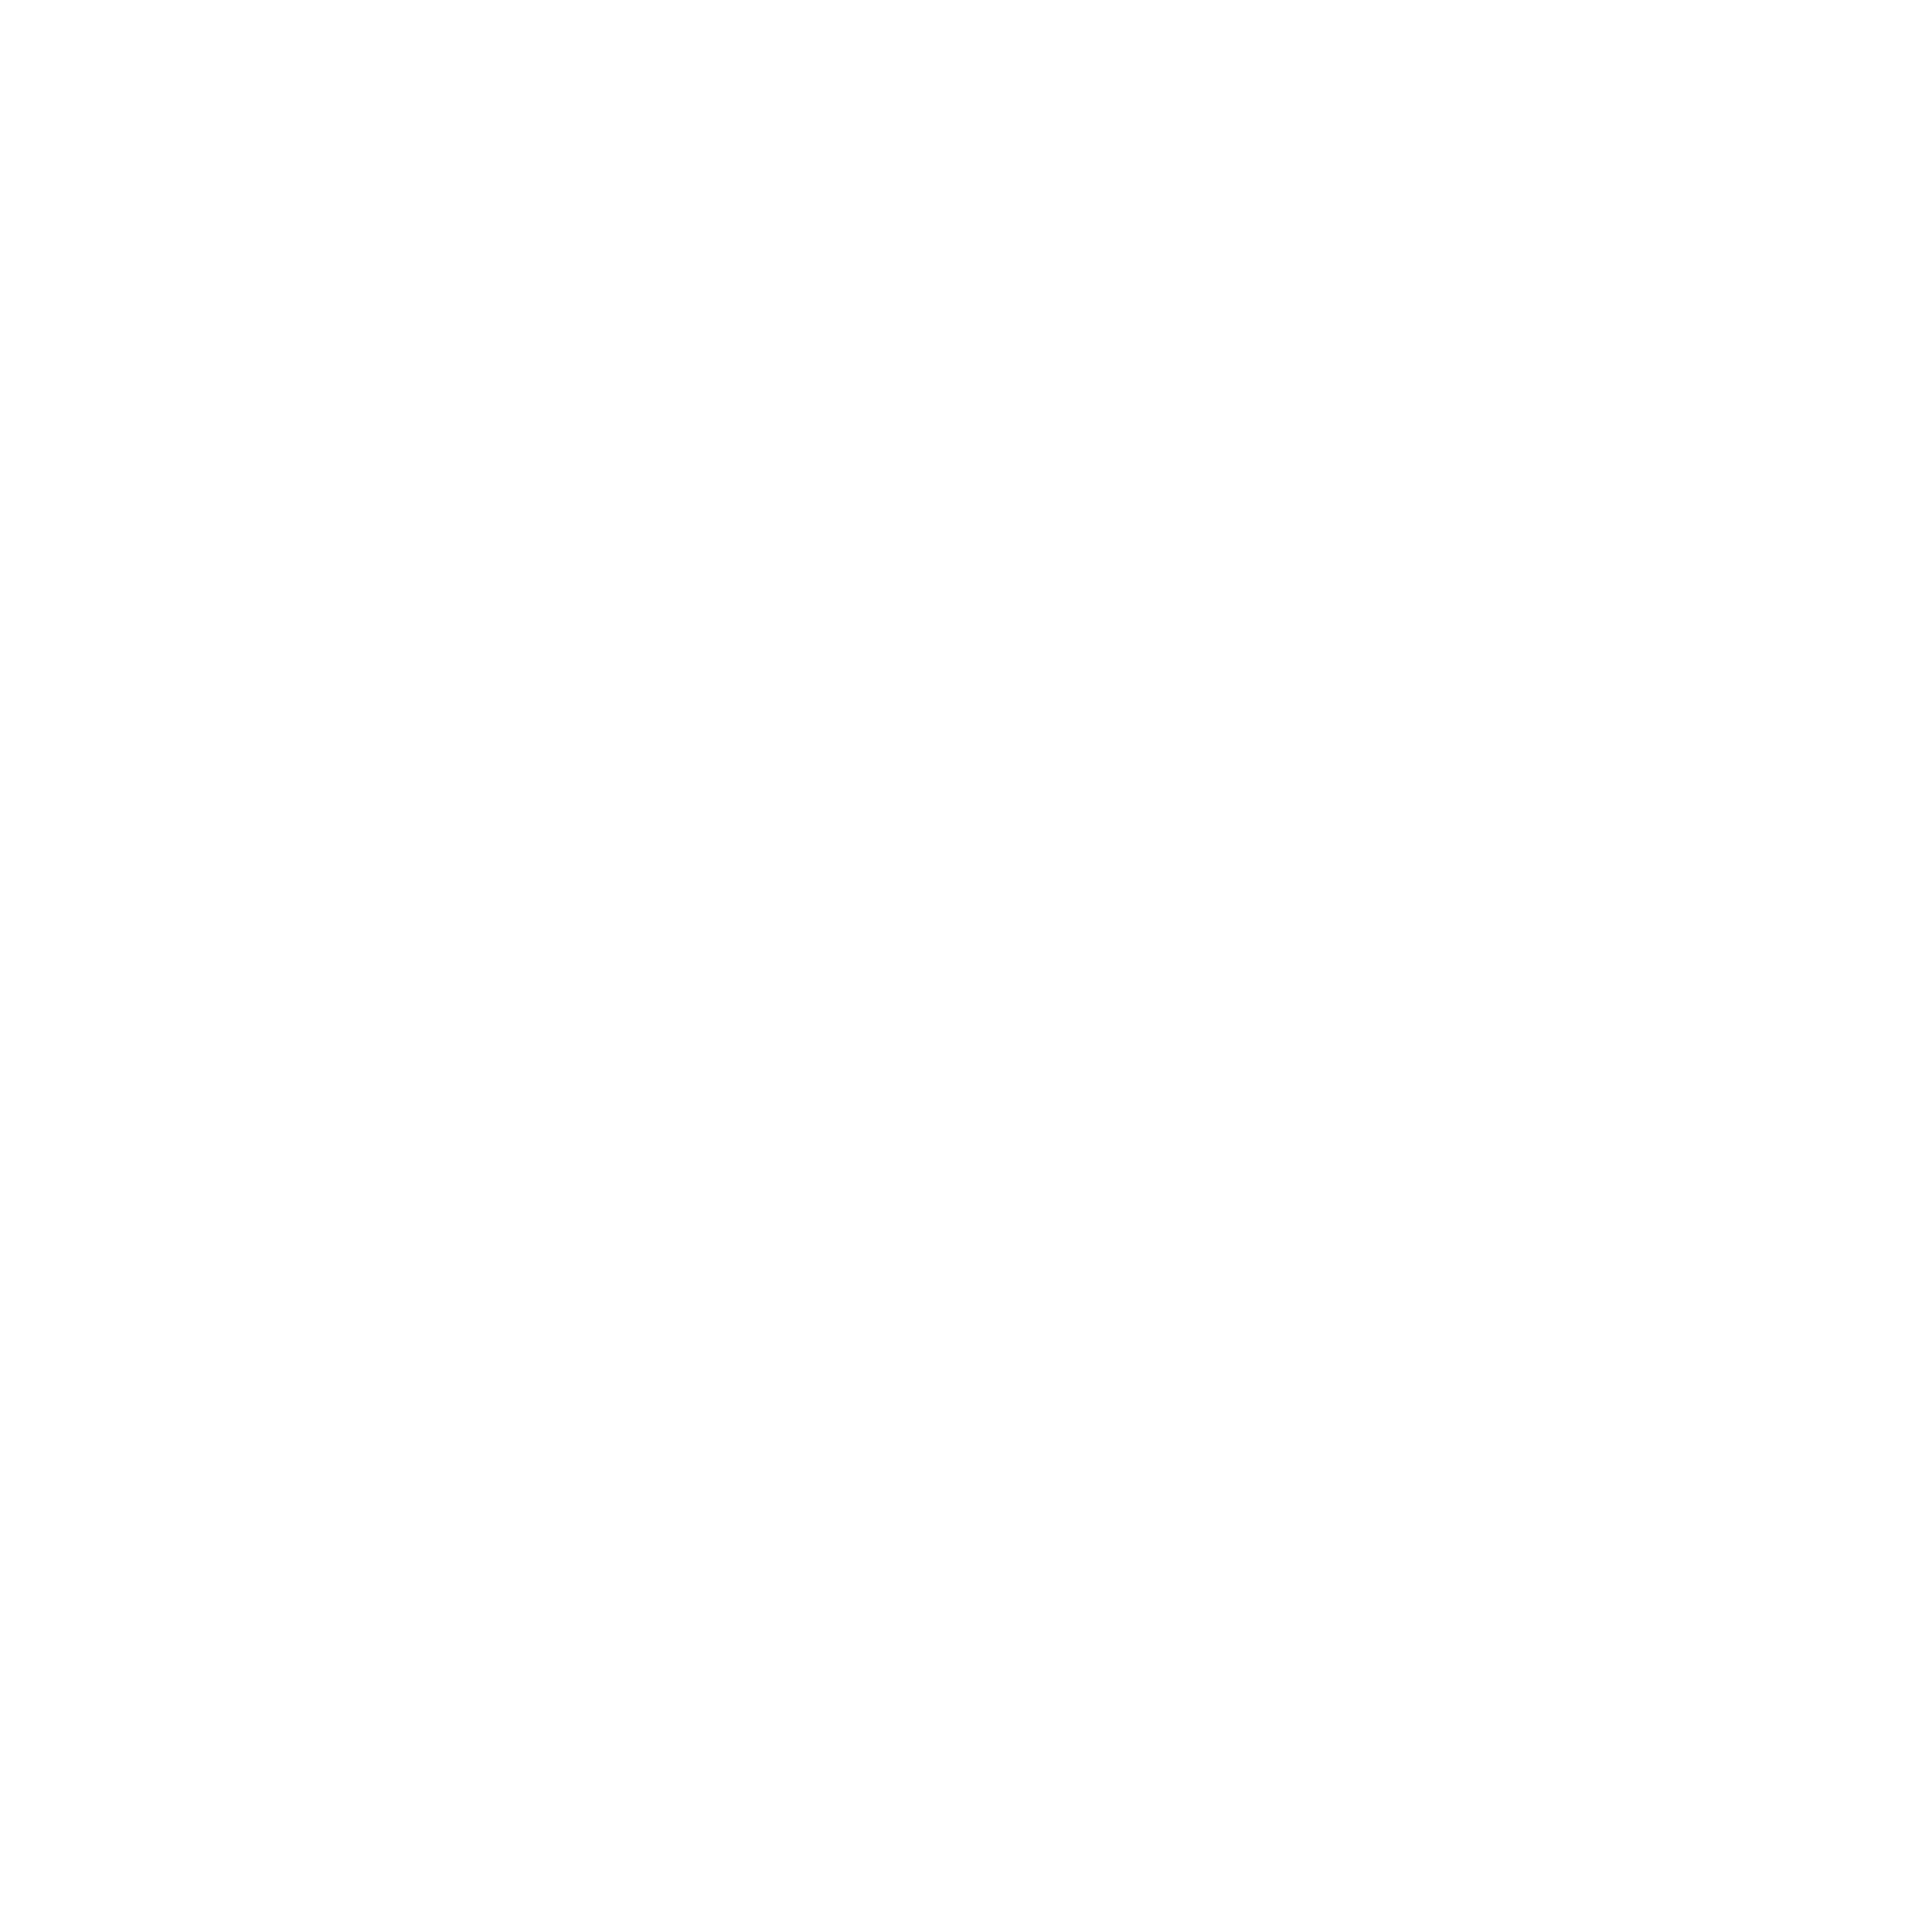 HIPAA - WE KEEP SENSIBLE DATA SAVE